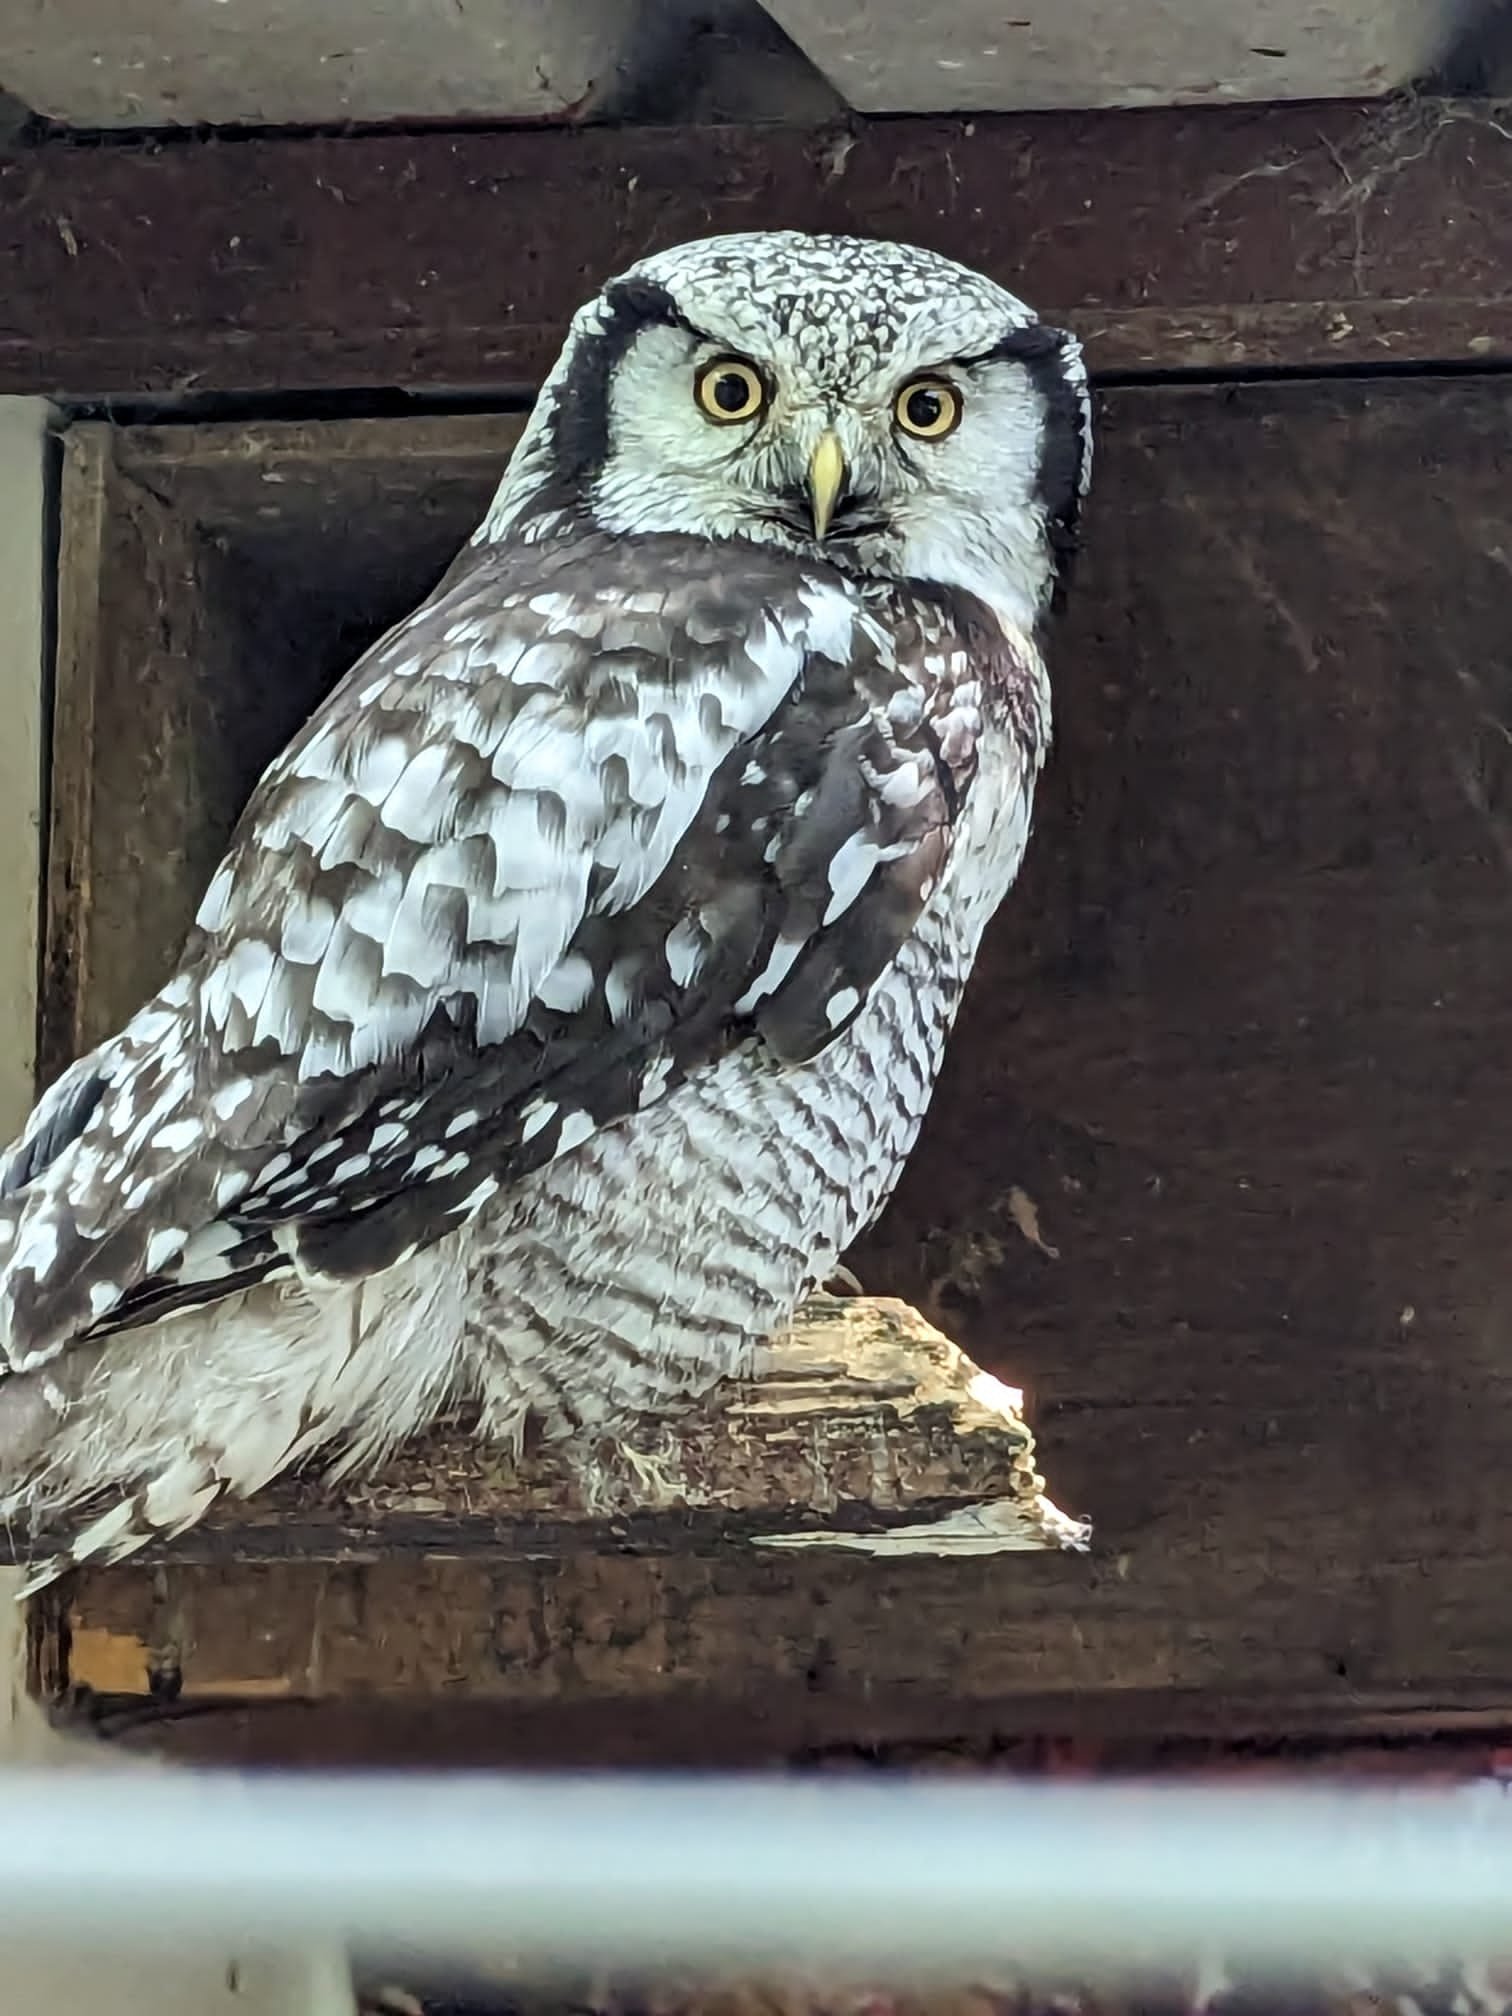 Owl Sanctuary visit with Jah-Jireh elderly care homes